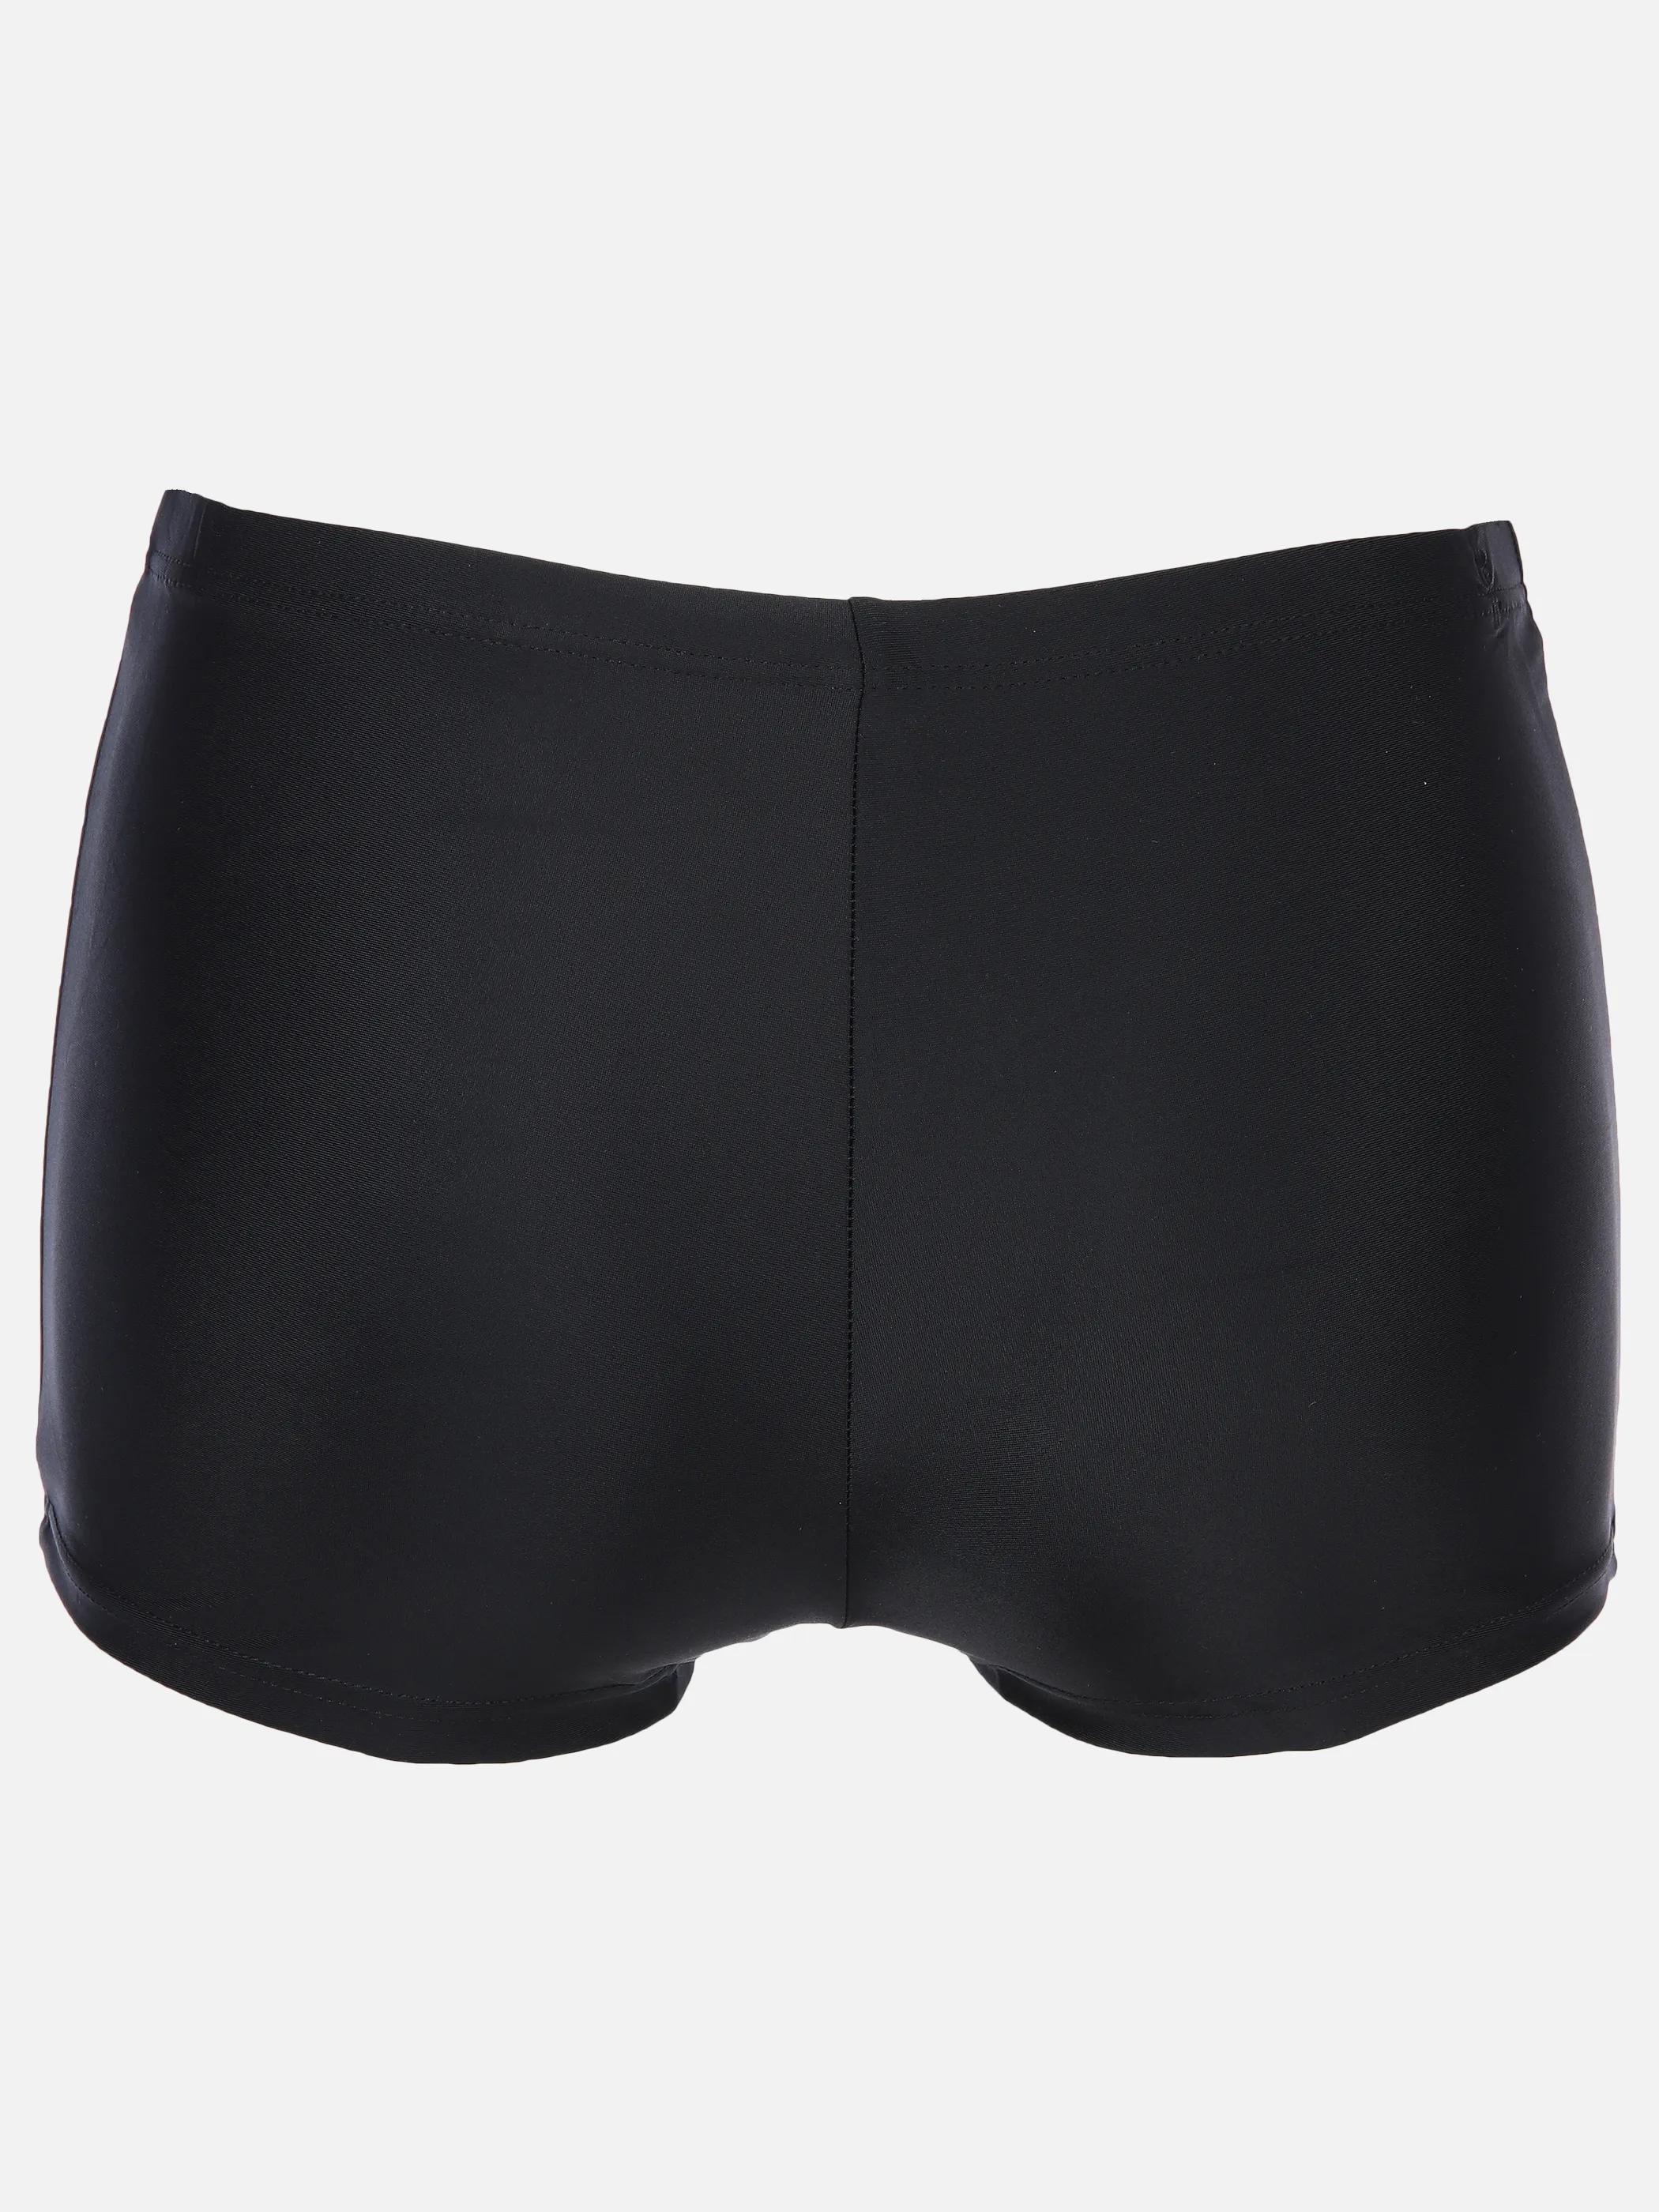 Grinario Sports Da-Bikini-Hose Schwarz 890131 BLACK 2